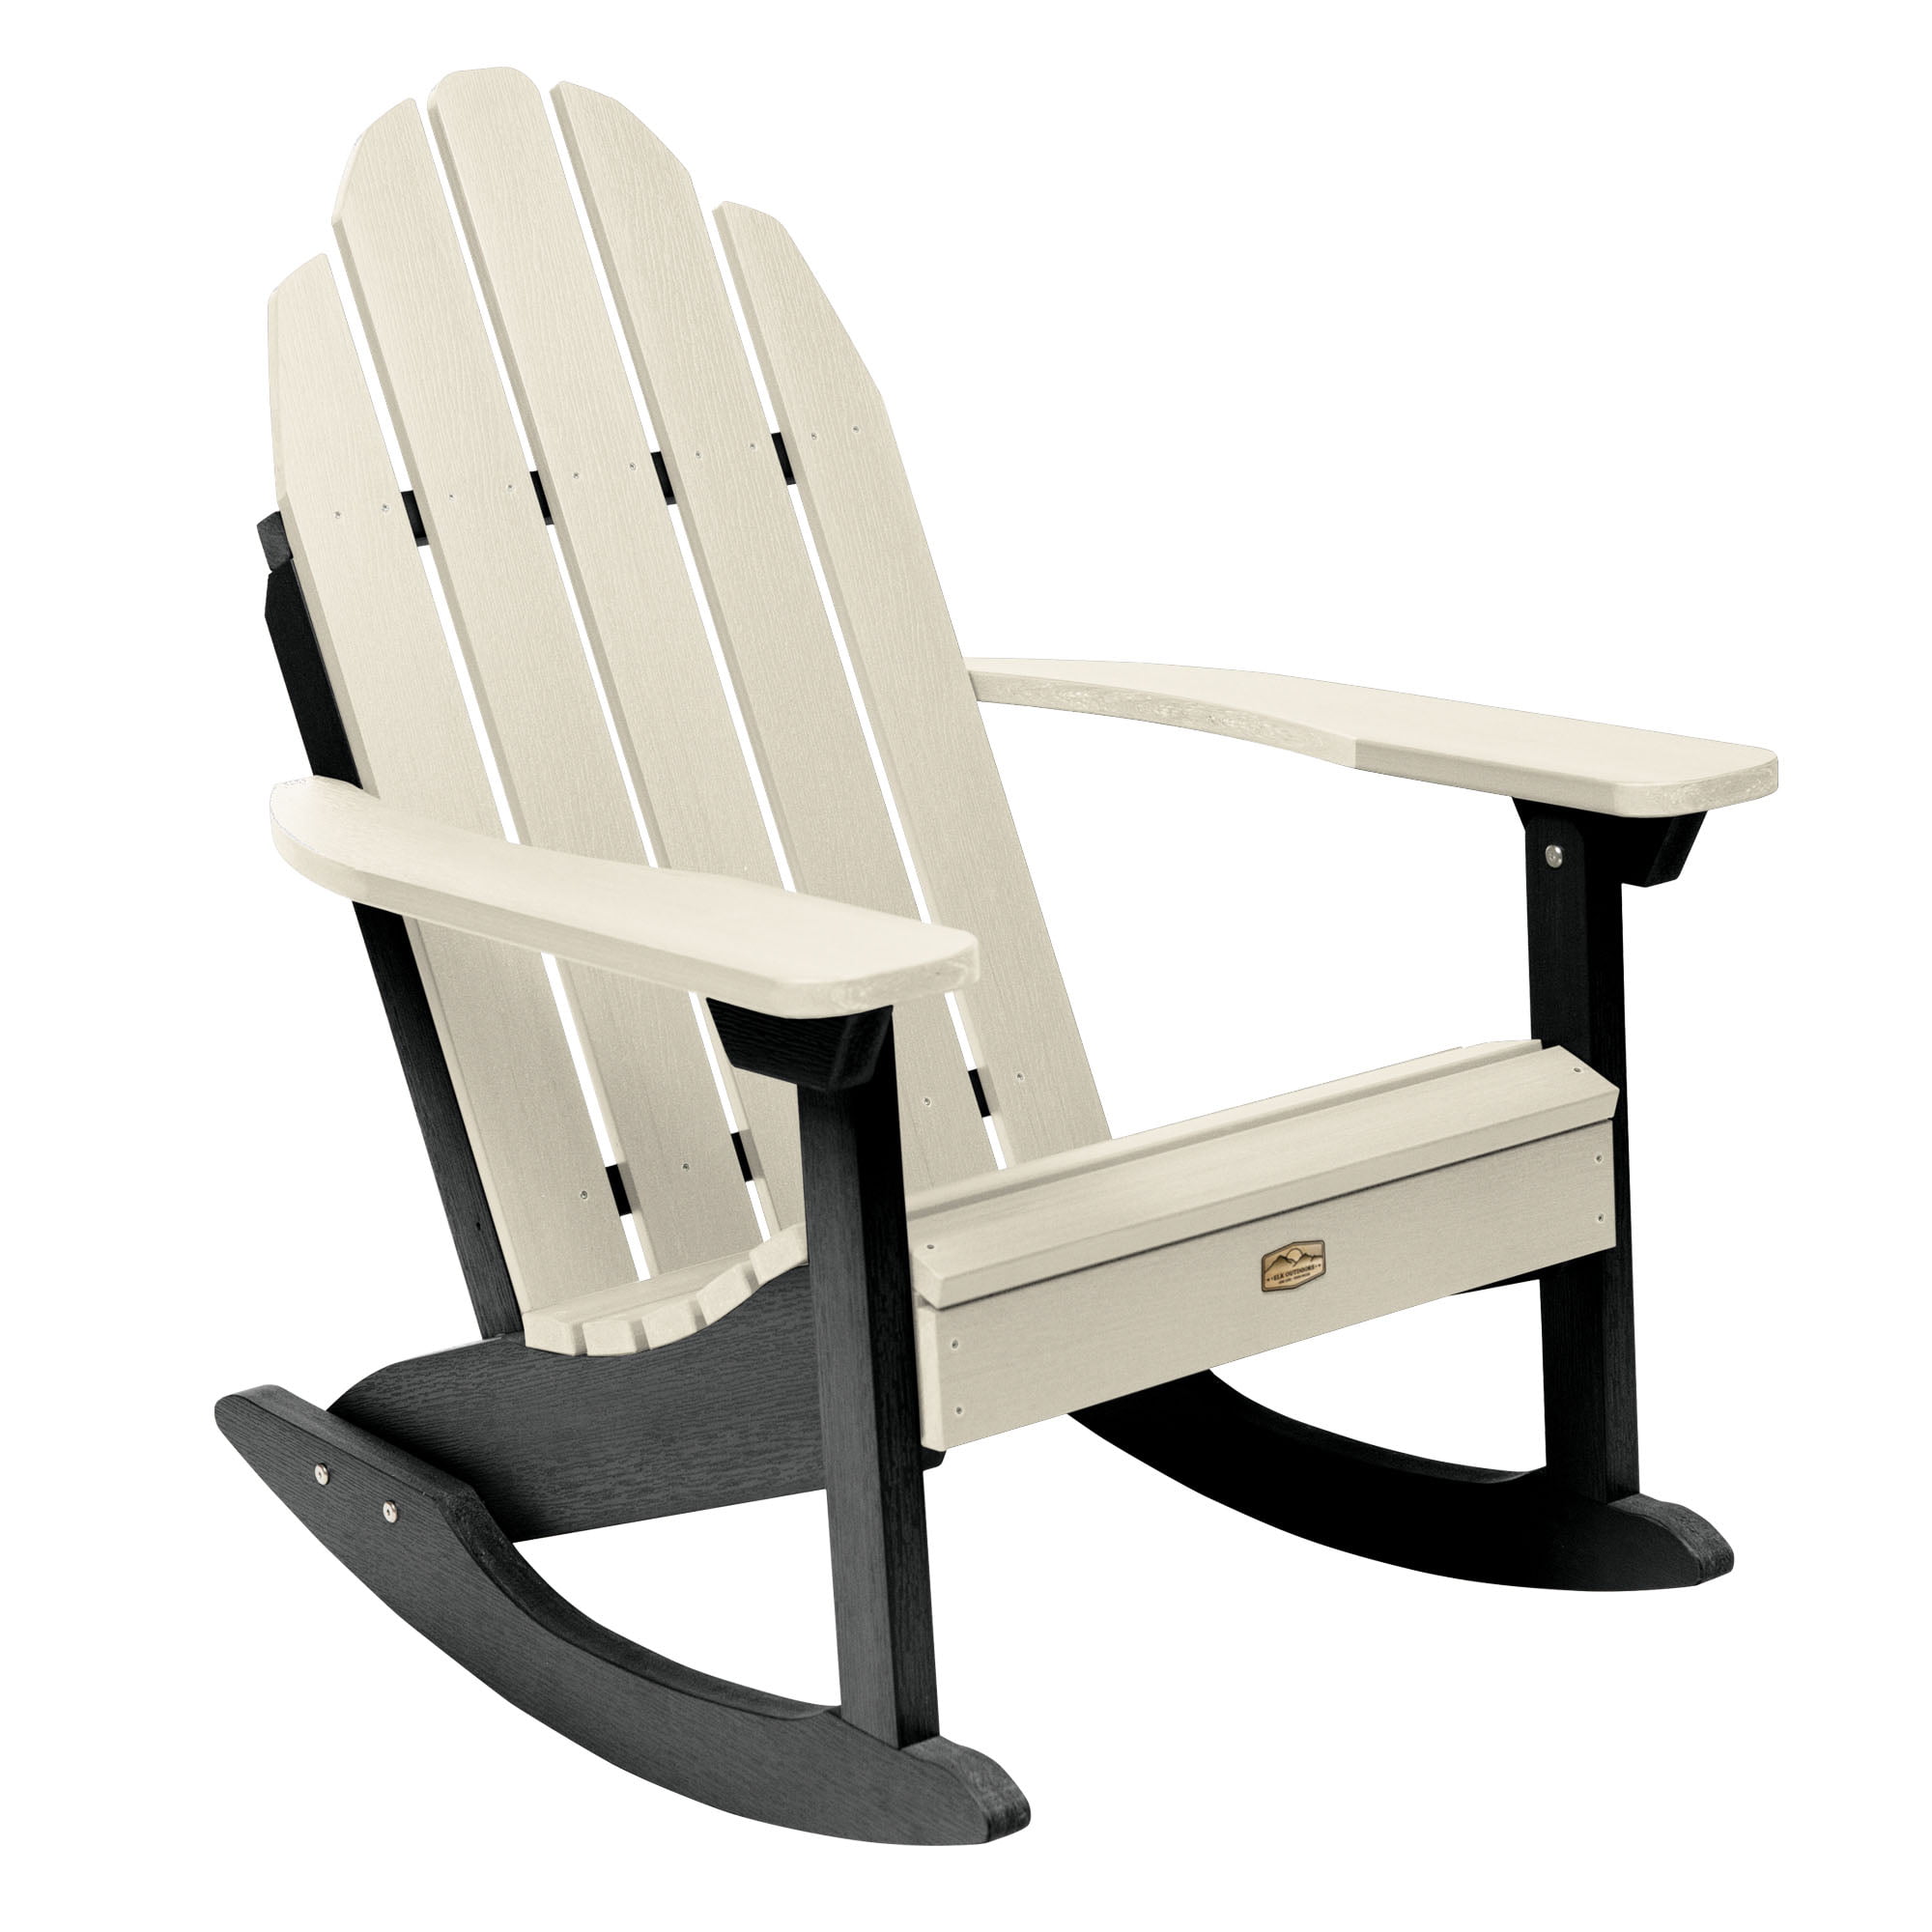 The Essential Adirondack Rocking Chair Bf889d44 8ac3 46dd Bfbd 49220743ab6e 1.34a80961404e9282fe90d6682198f5c9 